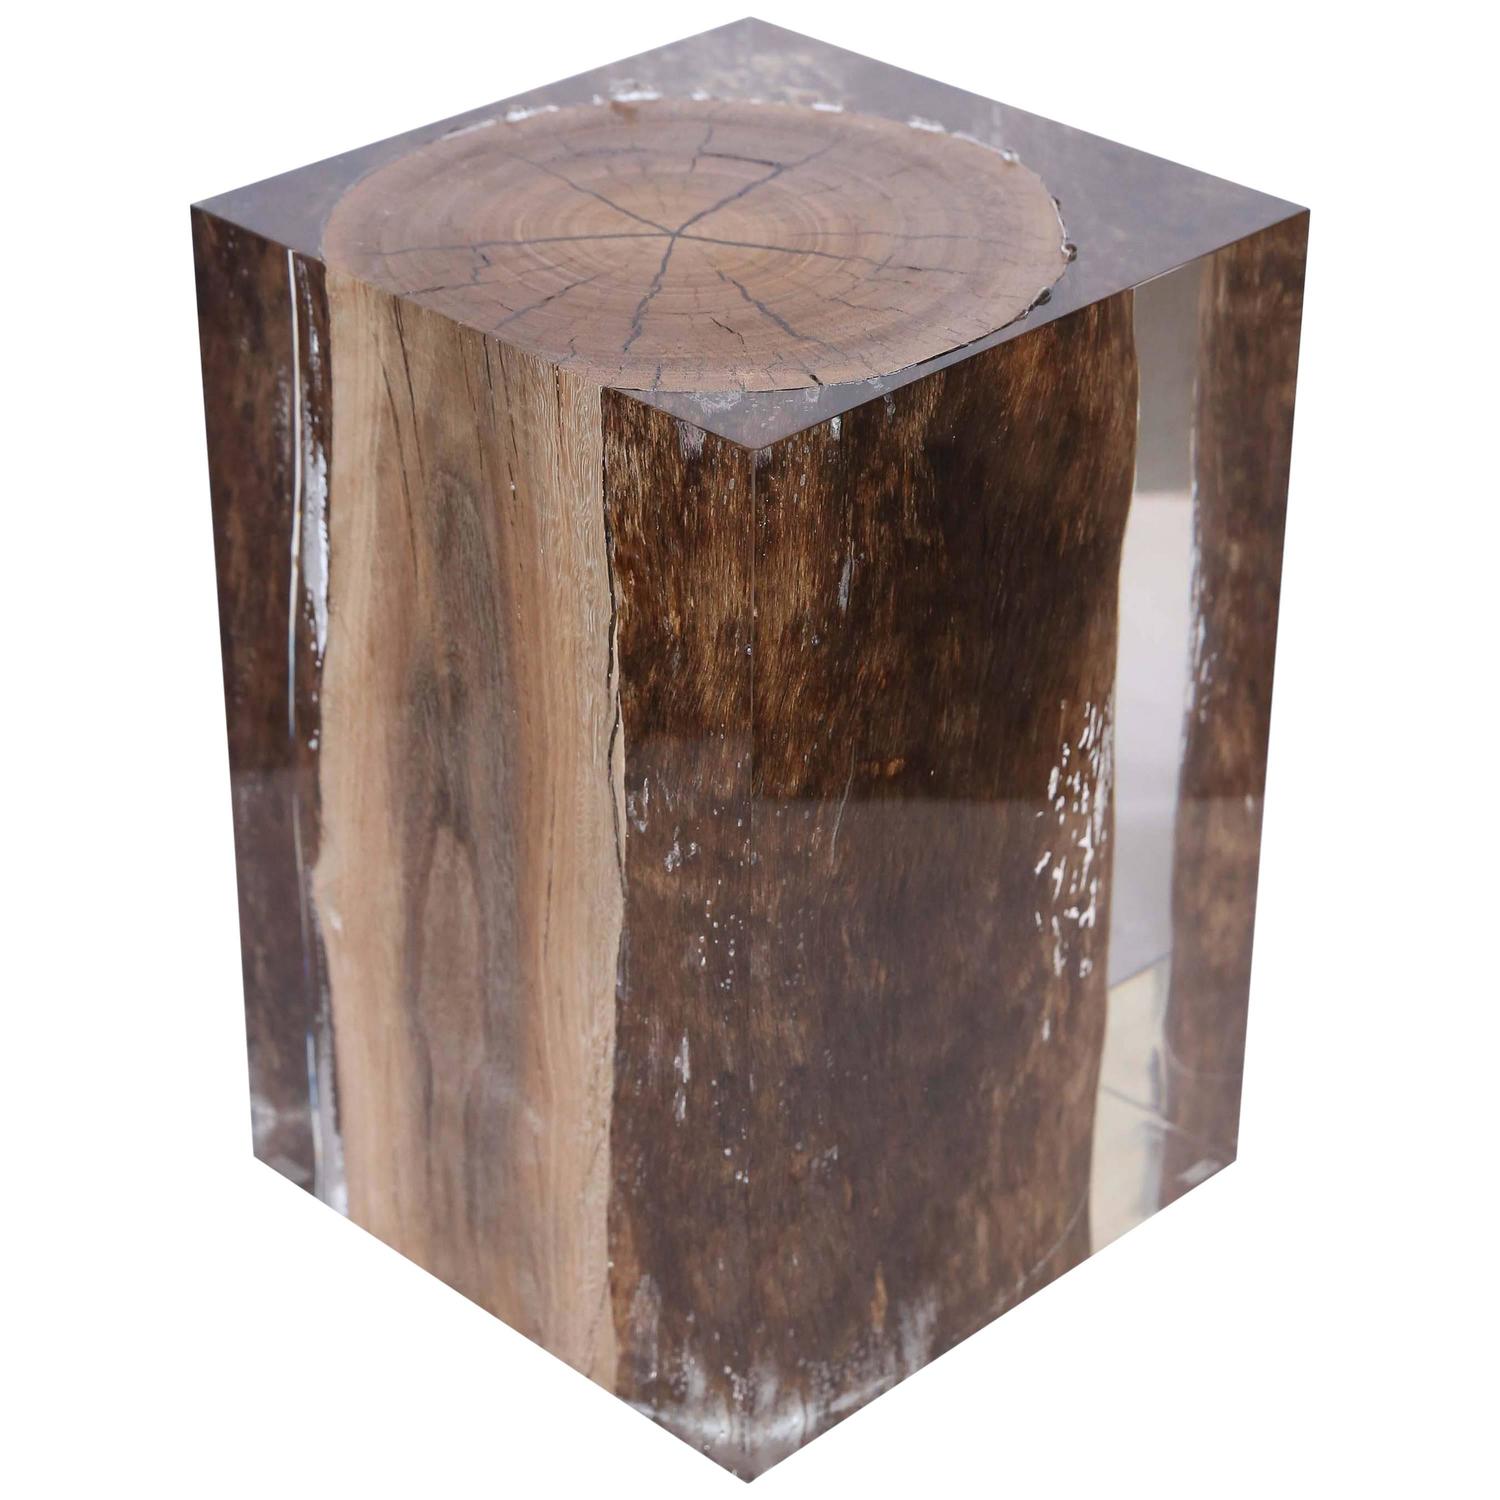 Driftwood Acrylic Table - 3 For Sale on 1stDibs